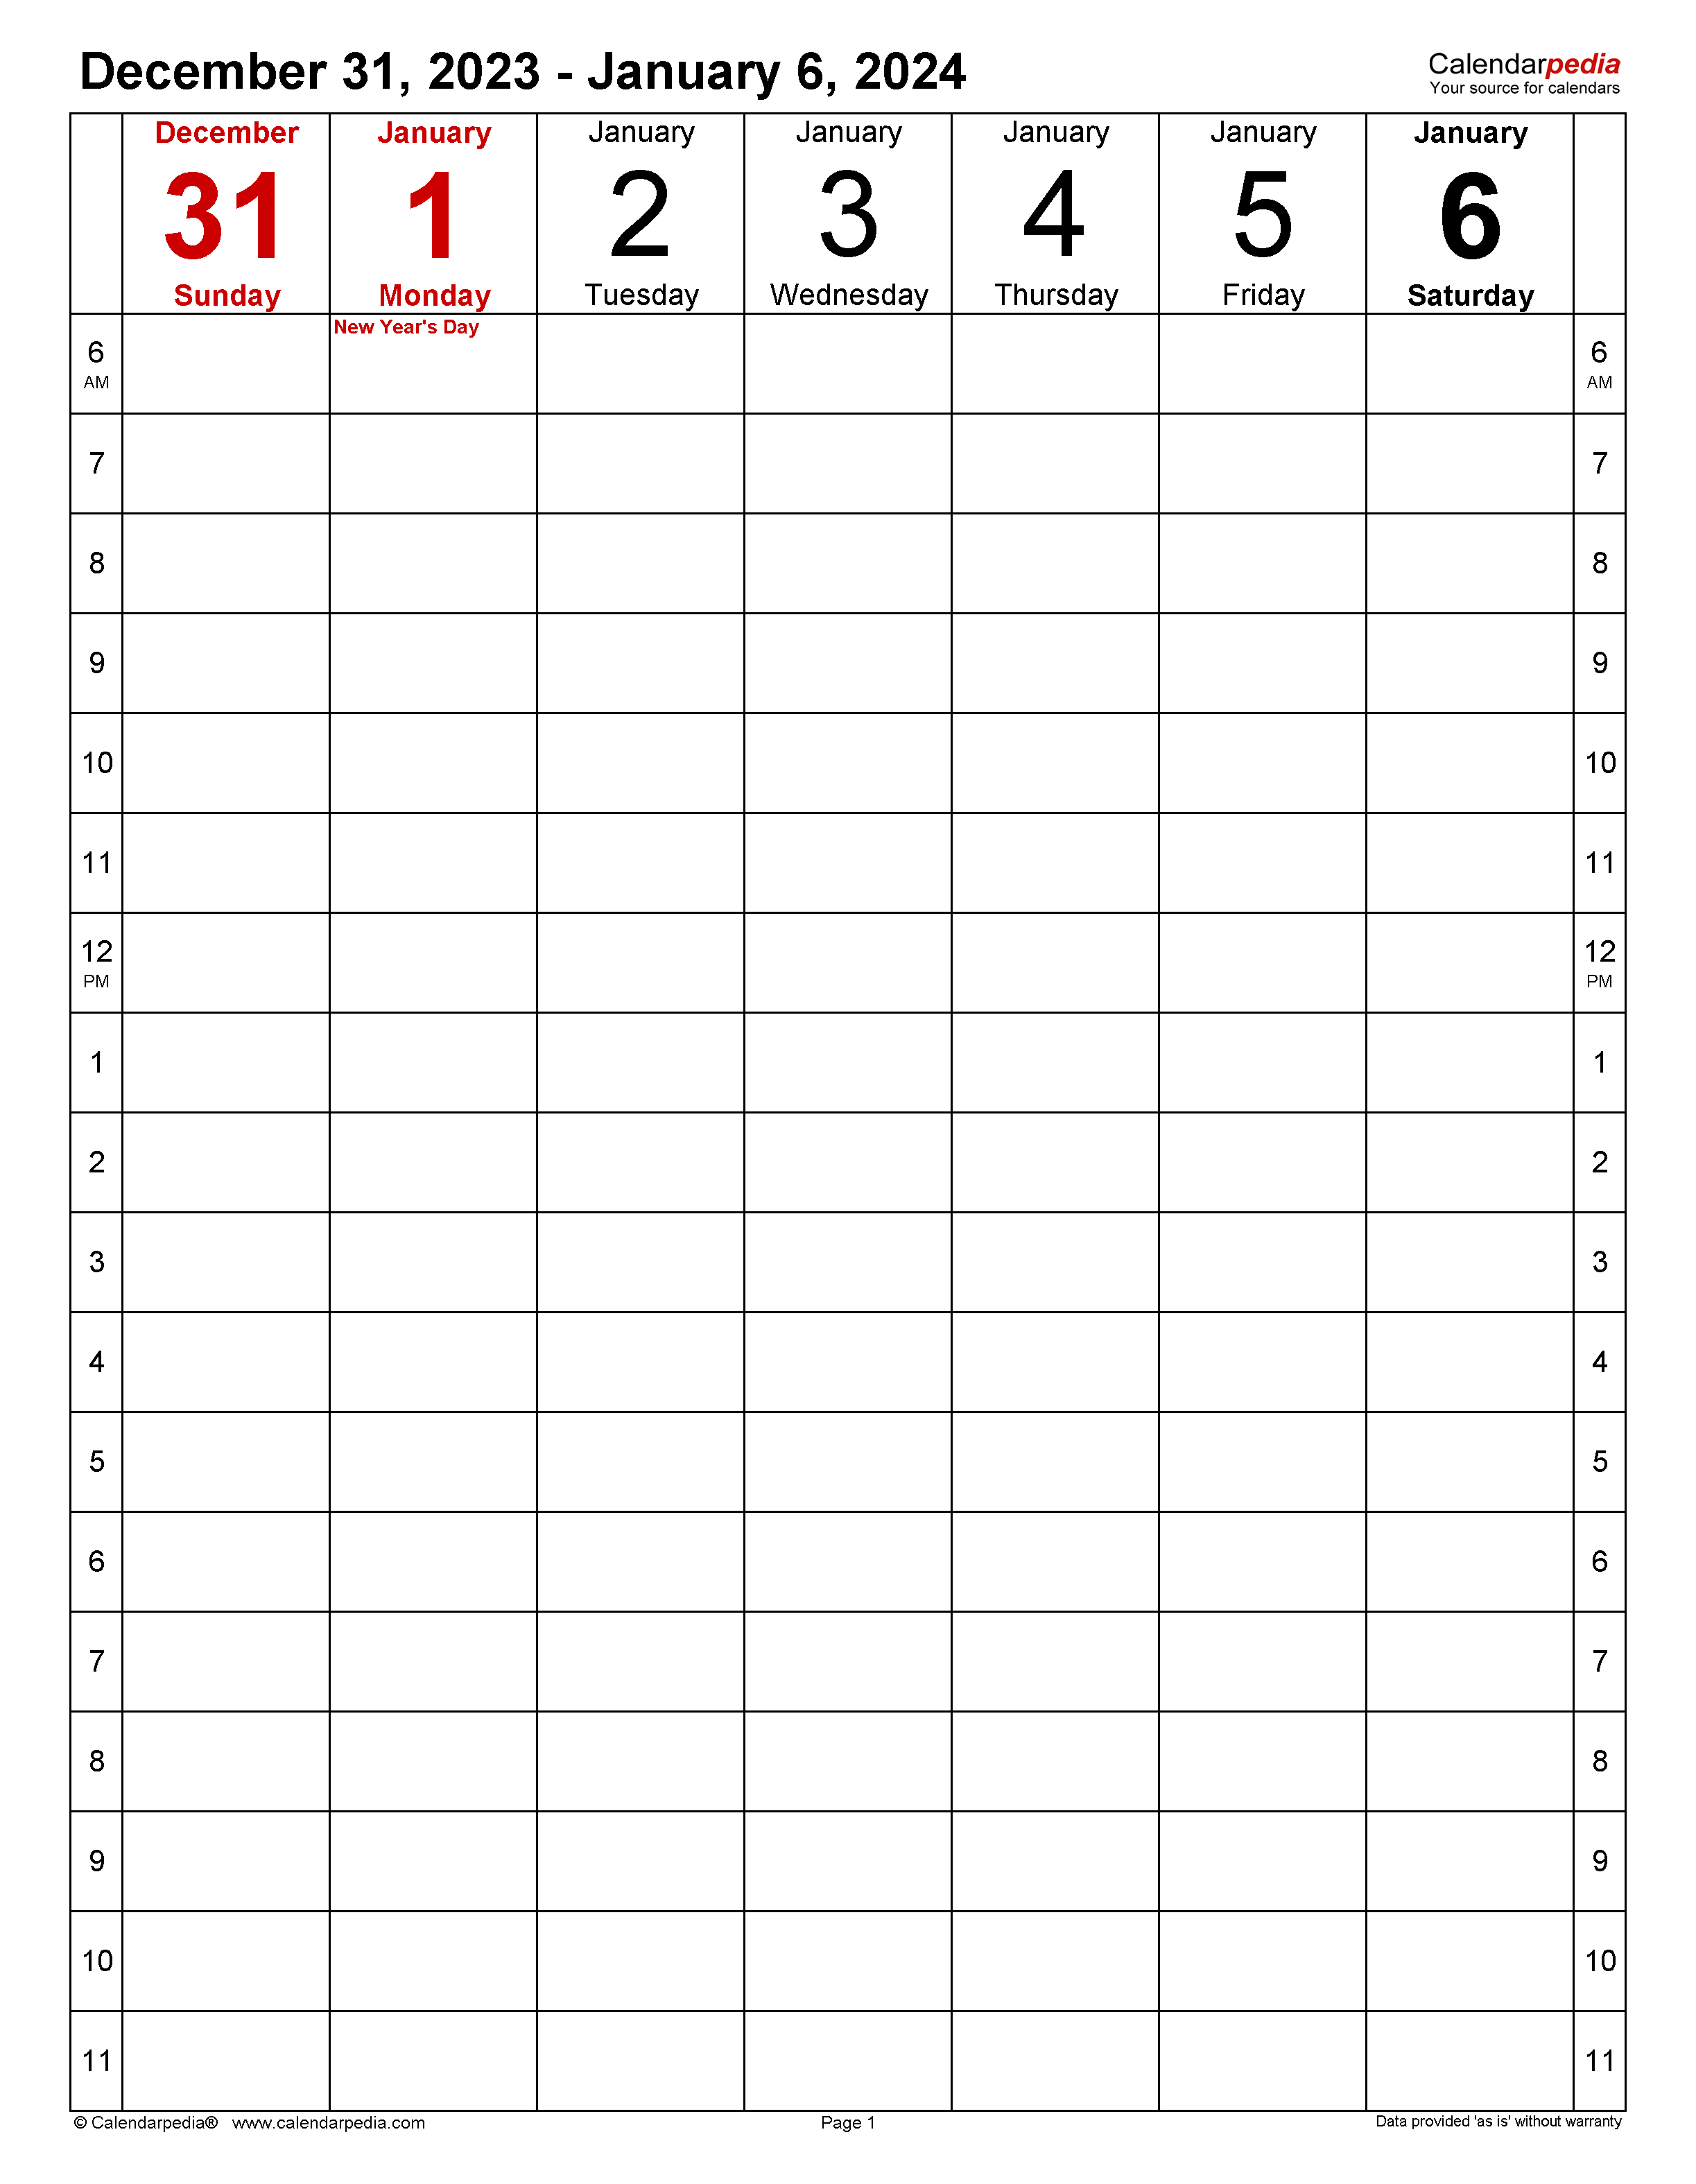 Weekly Calendars 2024 For Pdf - 12 Free Printable Templates for 2024 Printable Weekly Calendar